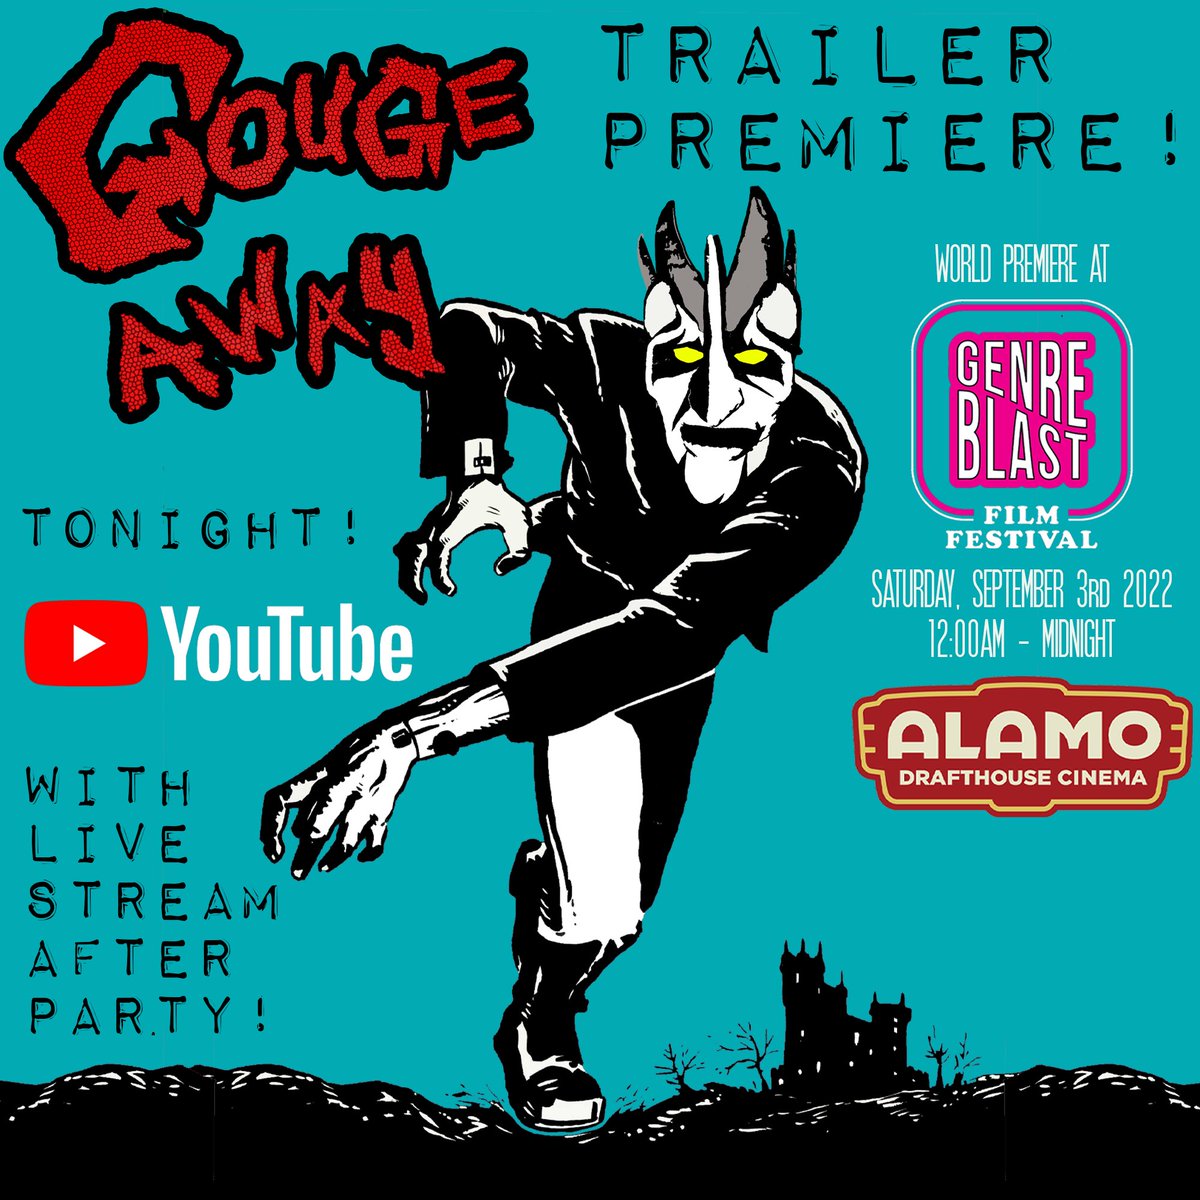 Gouge Away Trailer!!!
youtu.be/BbbAF75Ac9Q

#genreblast #alltheflavors 
#midnightmovie #gougeaway #pixies #alamodrafthouse #genrefilm #premiere #microbudgetfilm #filmmaking #psychotronic